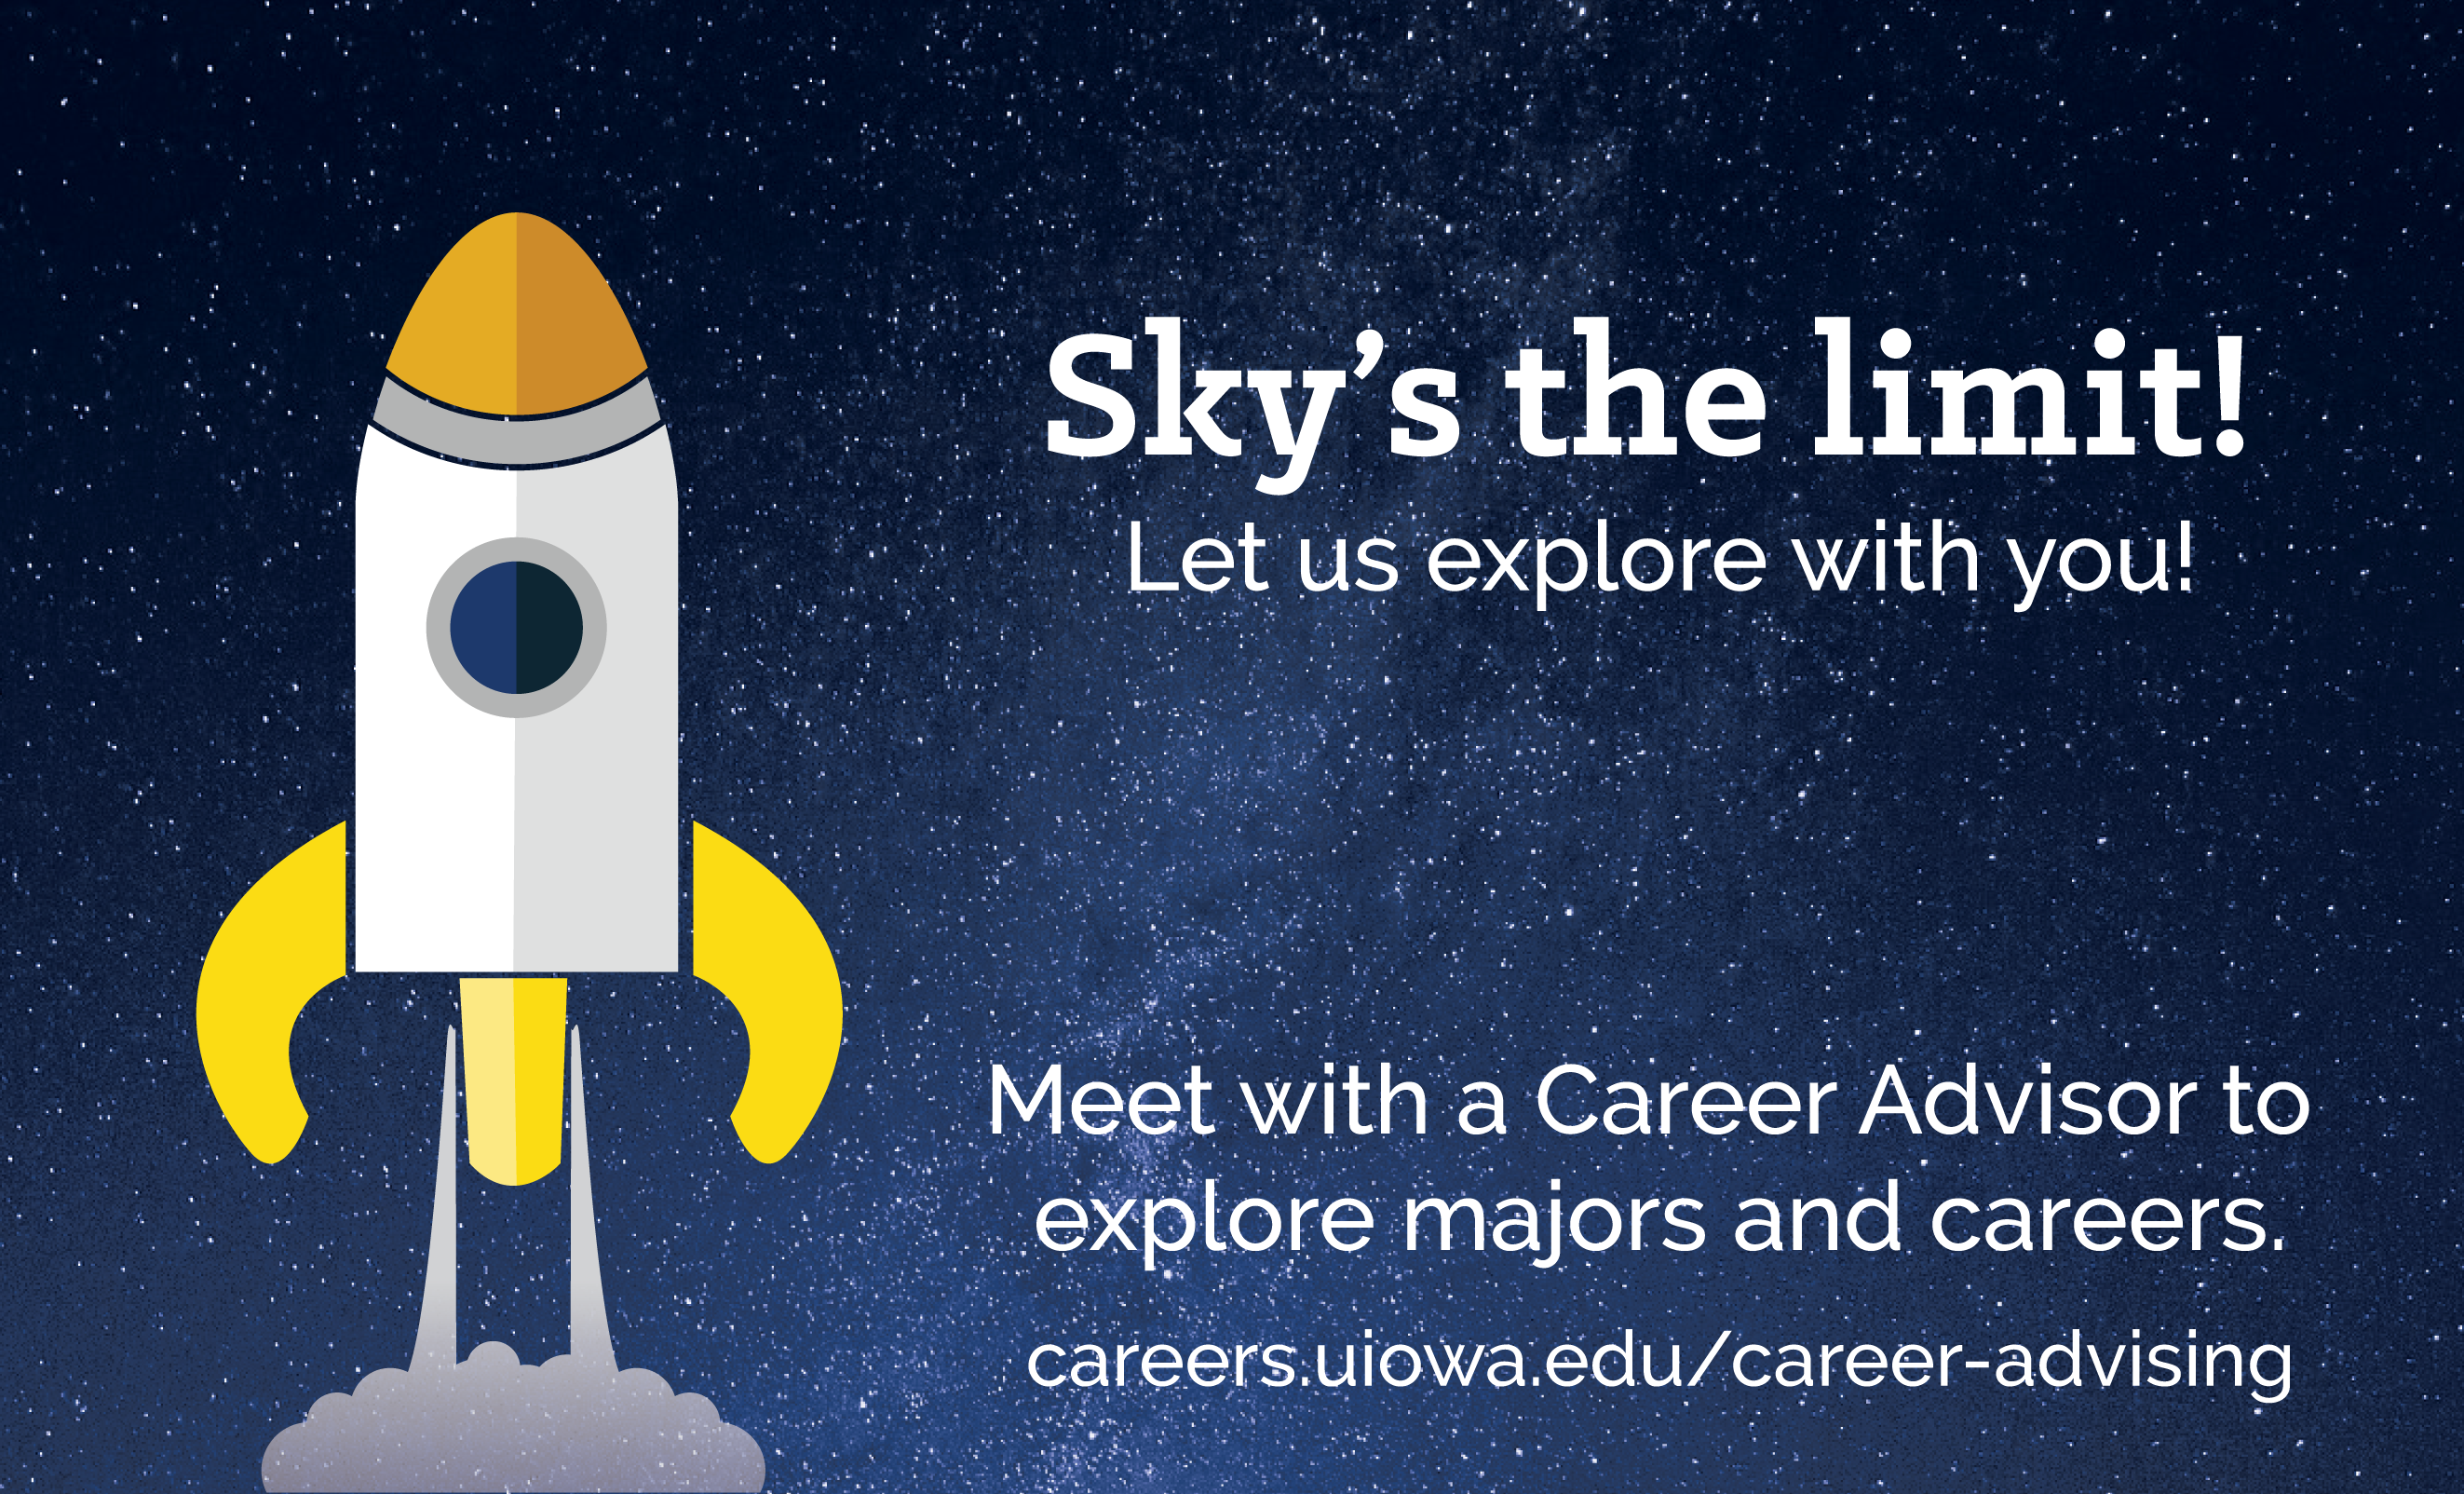 Meet with a Career Advisor to explore majors and careers.